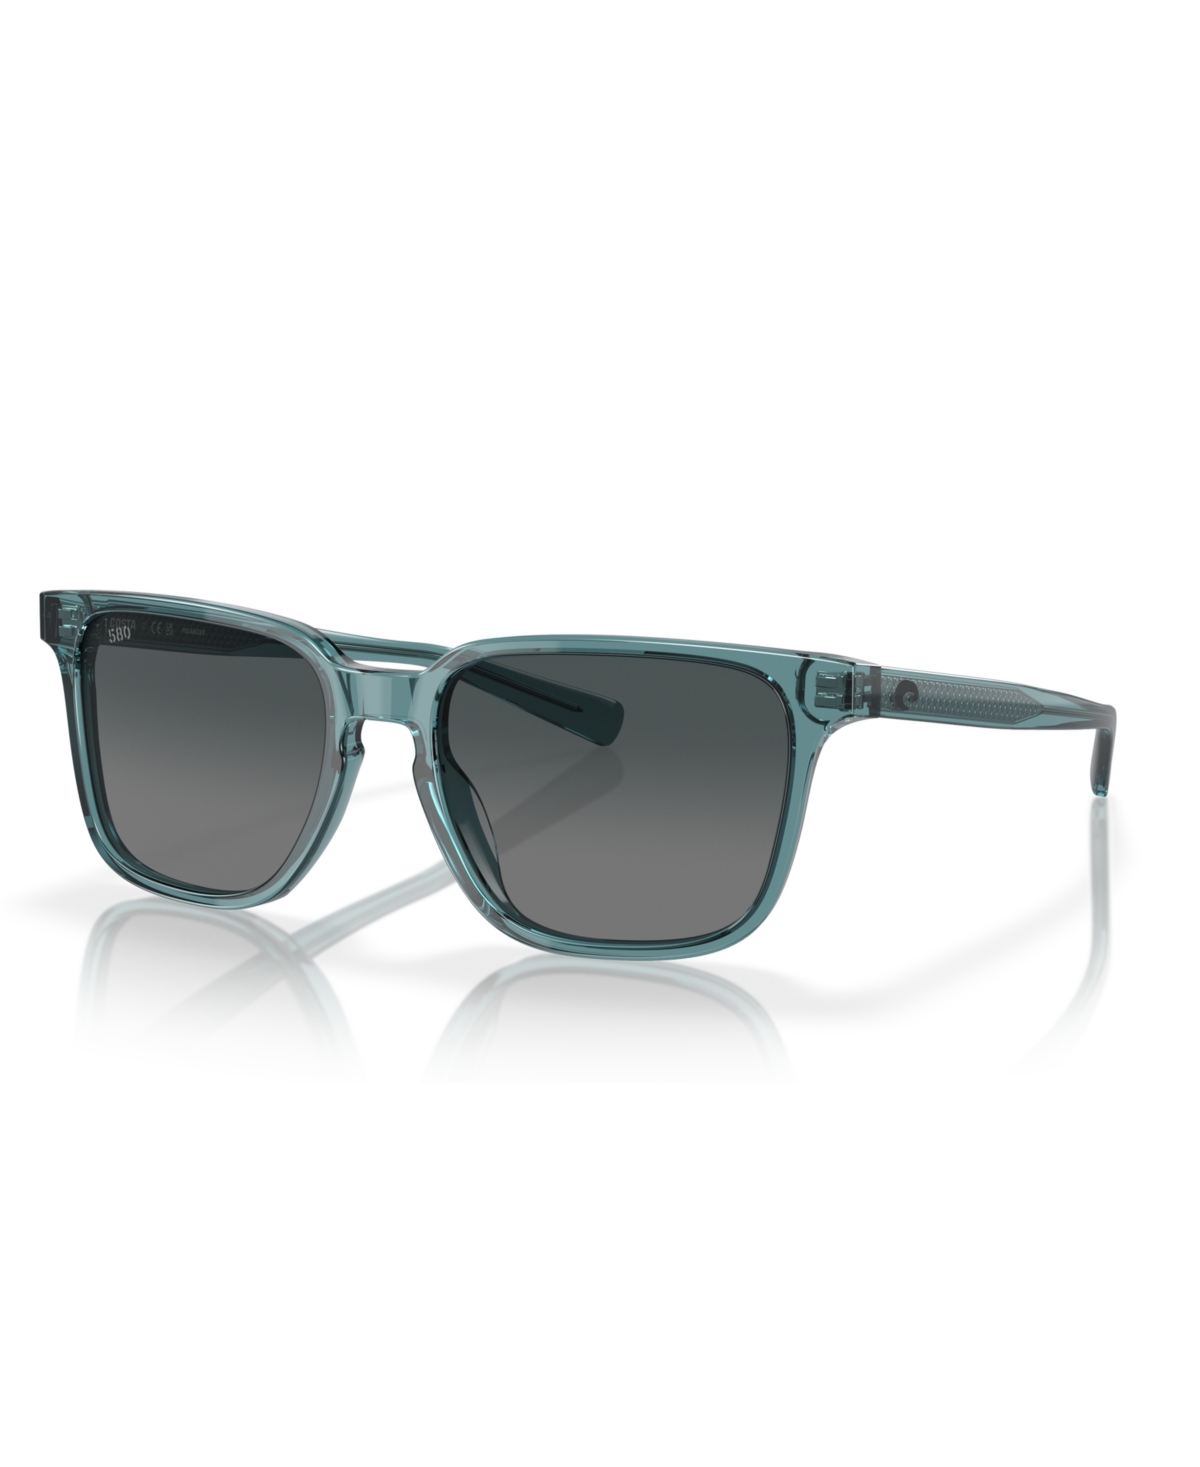 Men's Polarized Sunglasses, Kailano - Olive